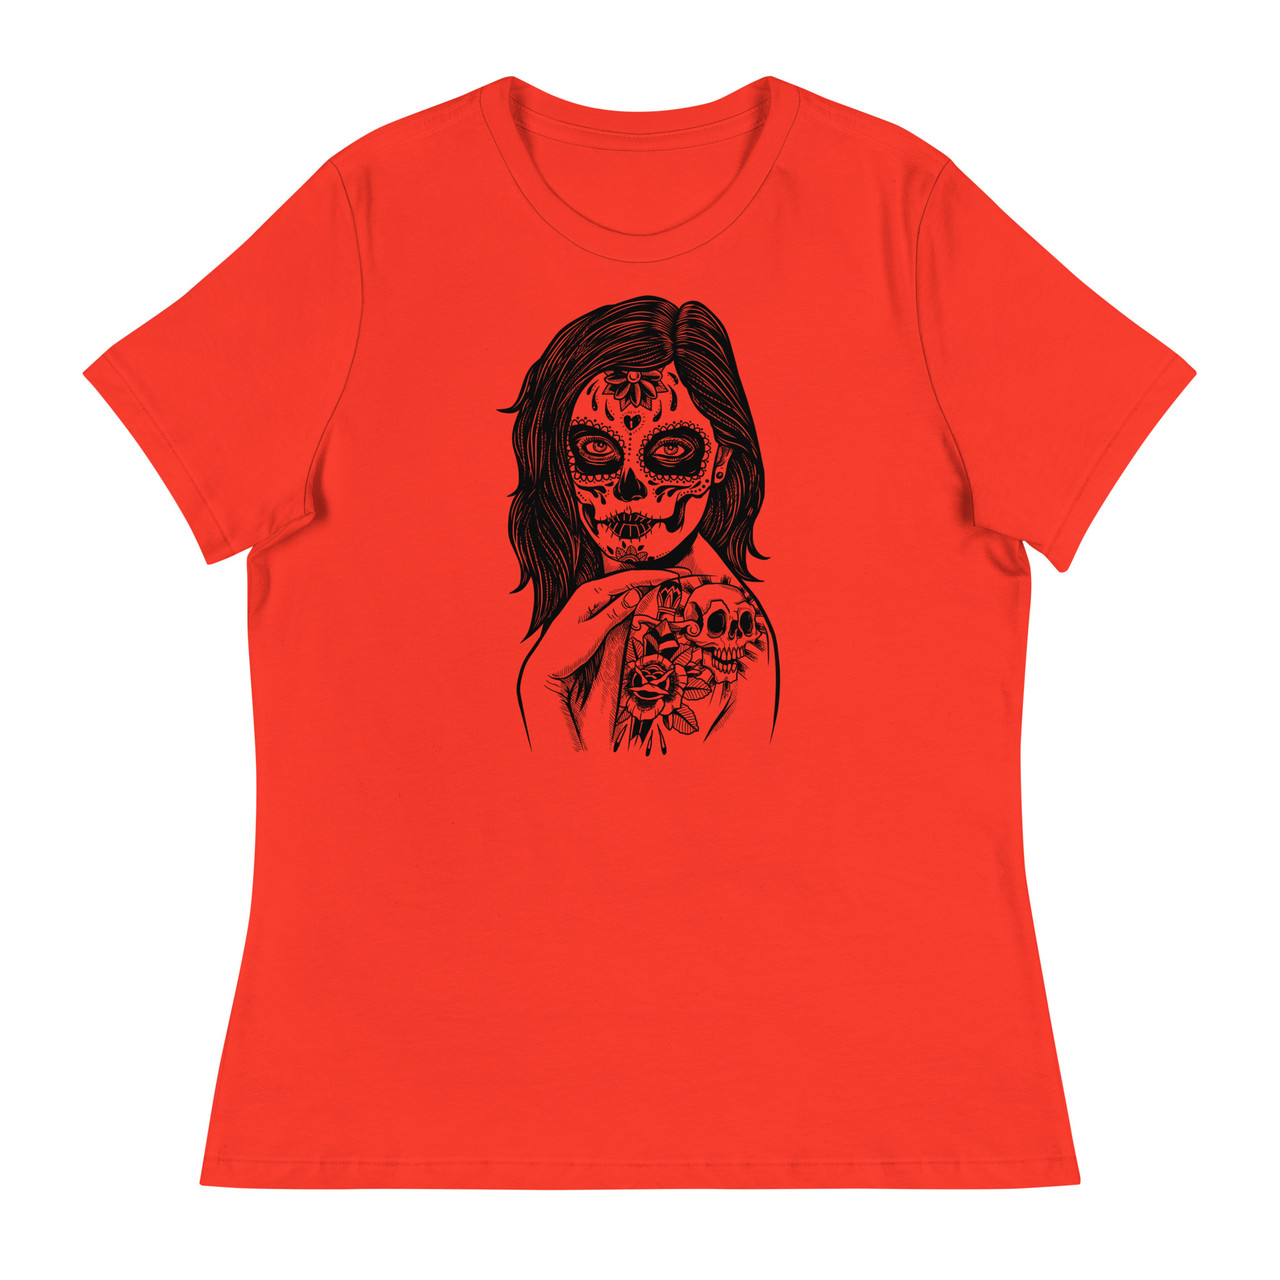 El Muerte Women's Relaxed T-Shirt - Bella + Canvas 6400 